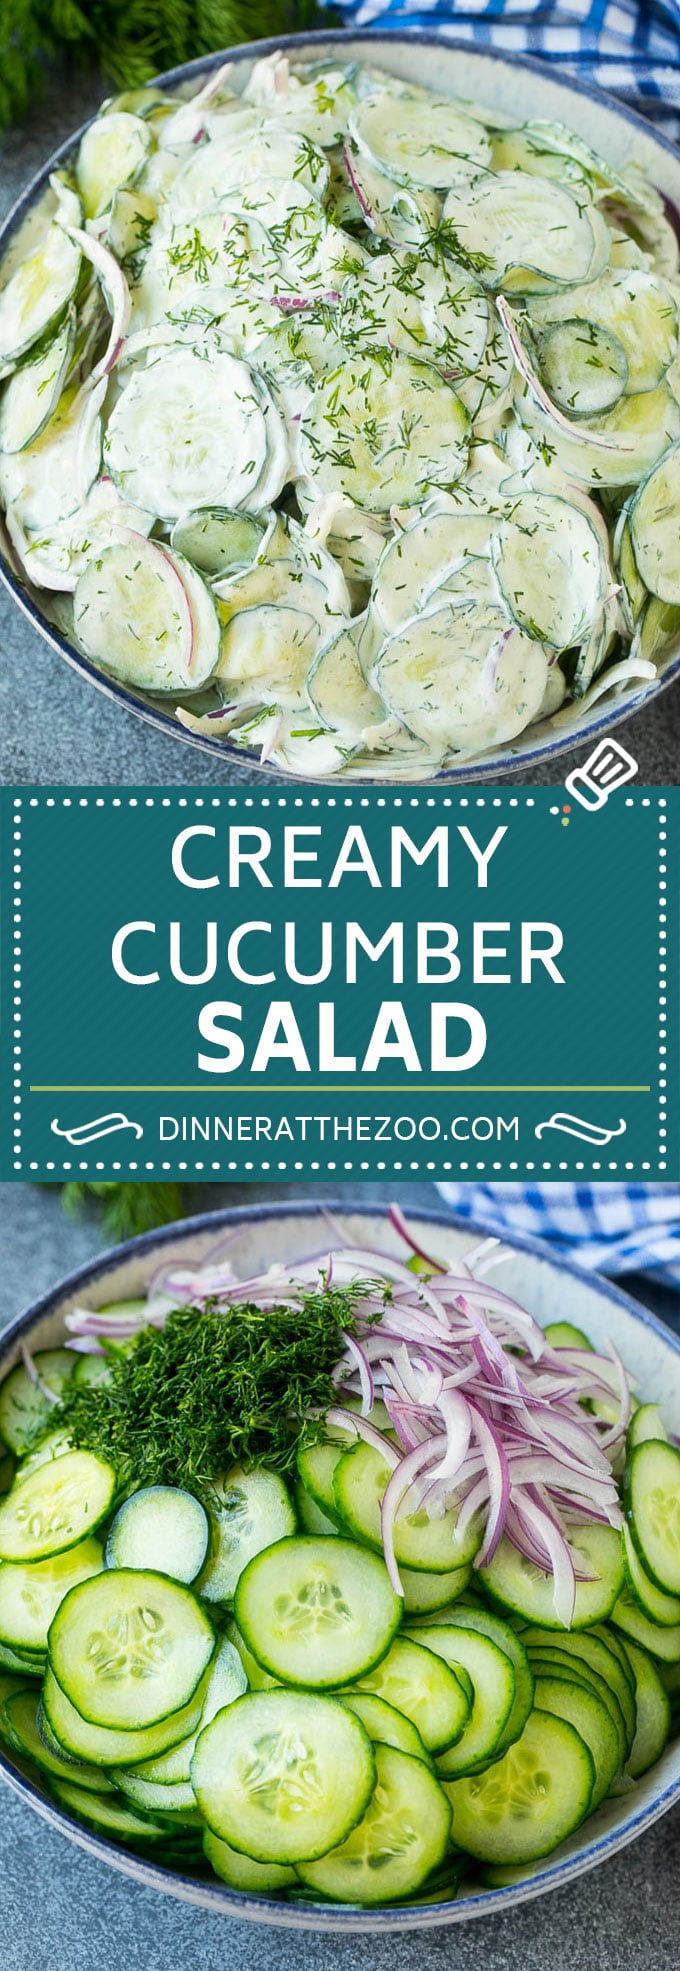 Creamy Cucumber Salad Recipe | German Cucumber Salad | Cucumber Salad #cucumber #salad #dinner #lunch #dinneratthezoo #cucumbersalad